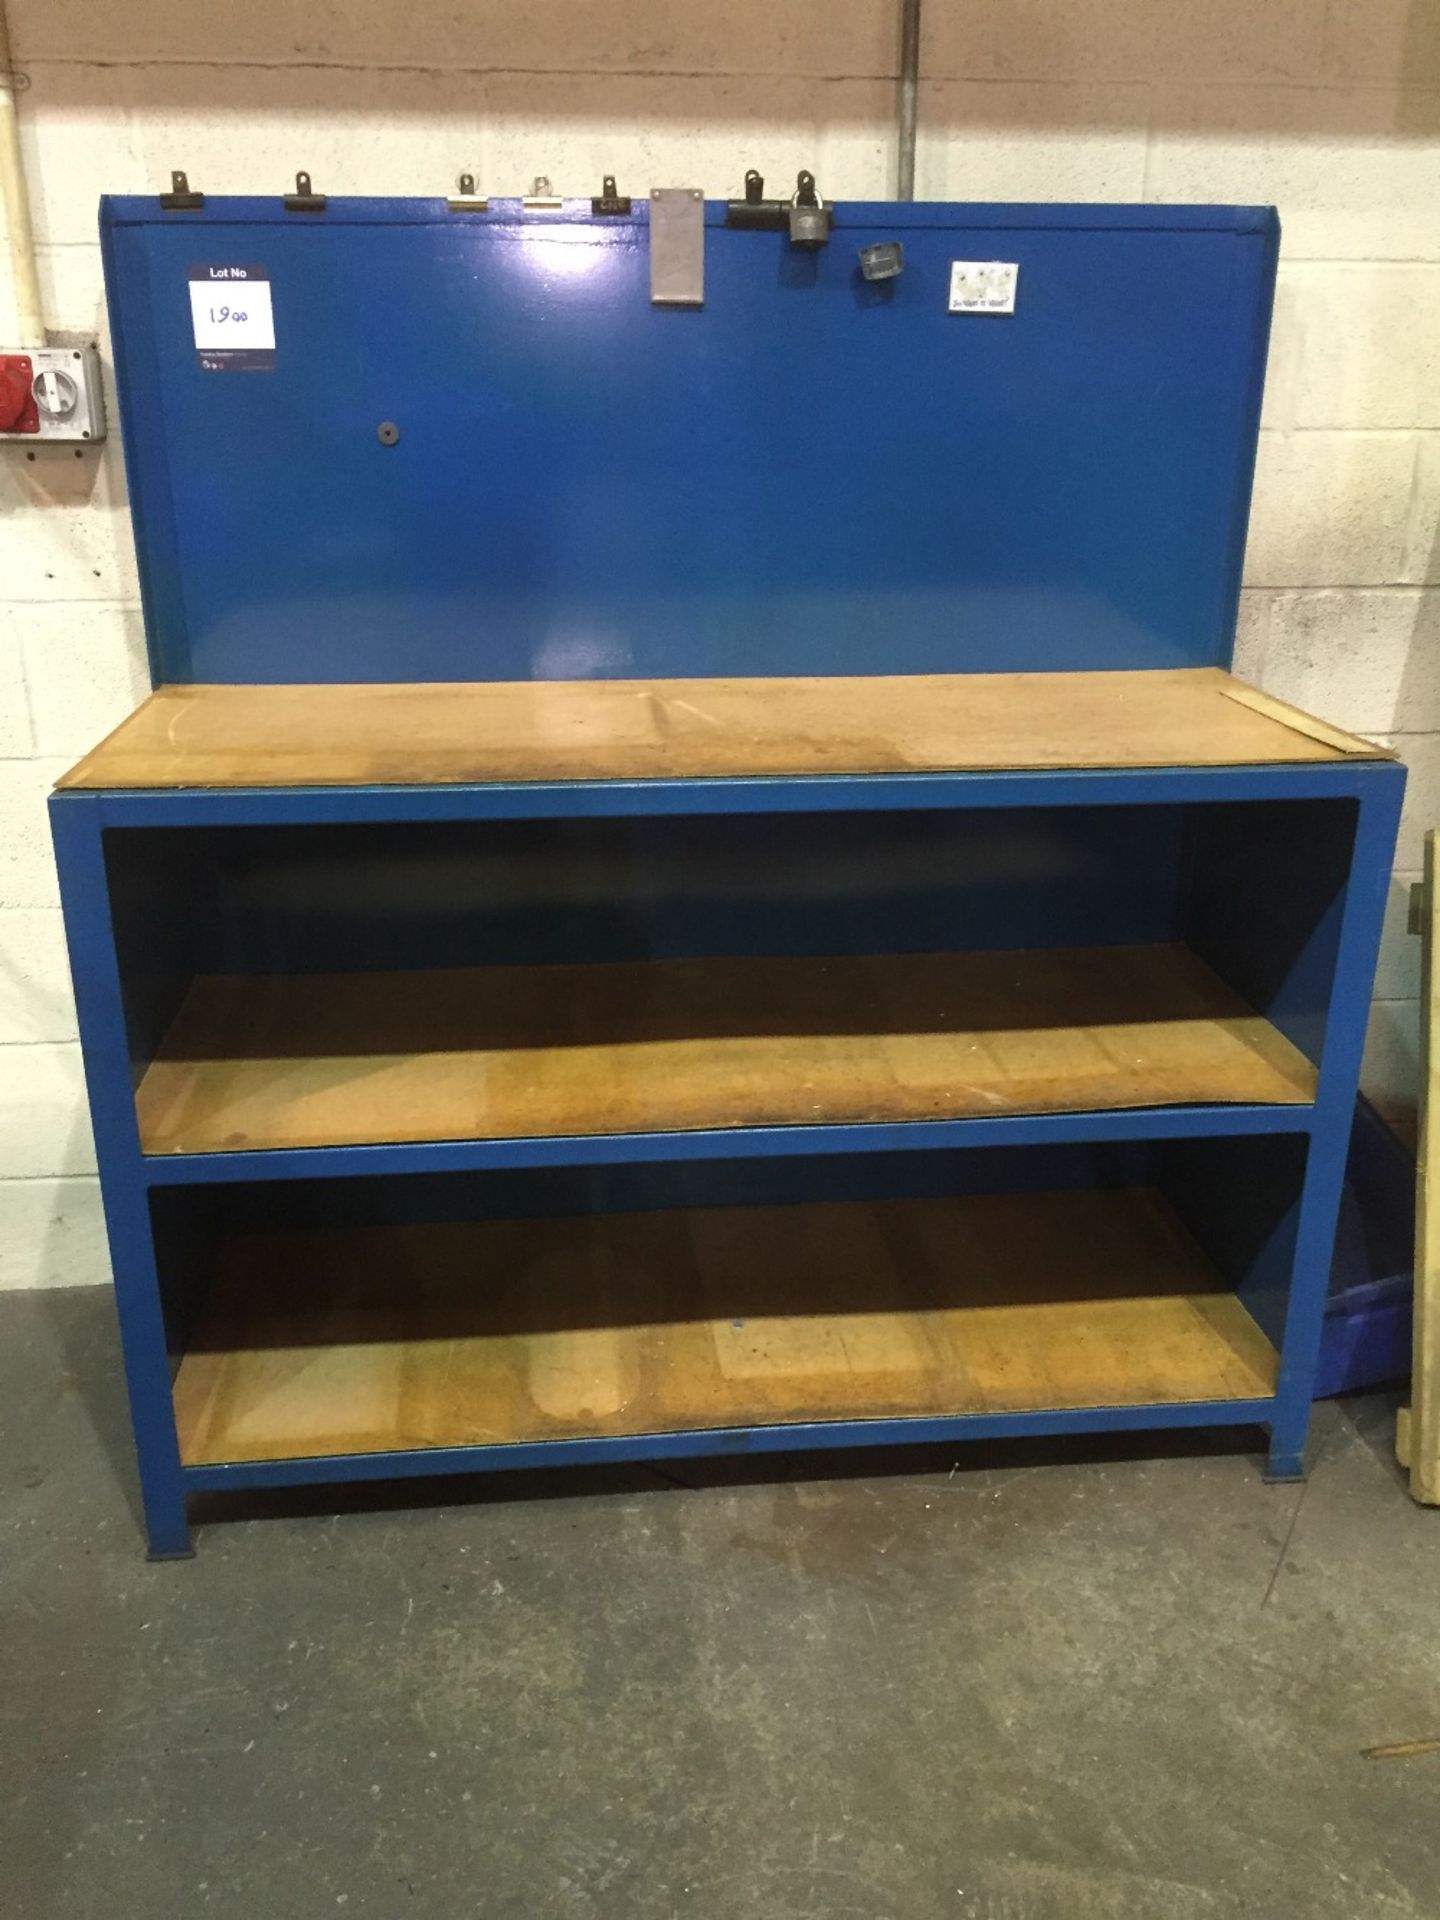 Blue steel 1500mm wide work bench/shelving unit
Lo